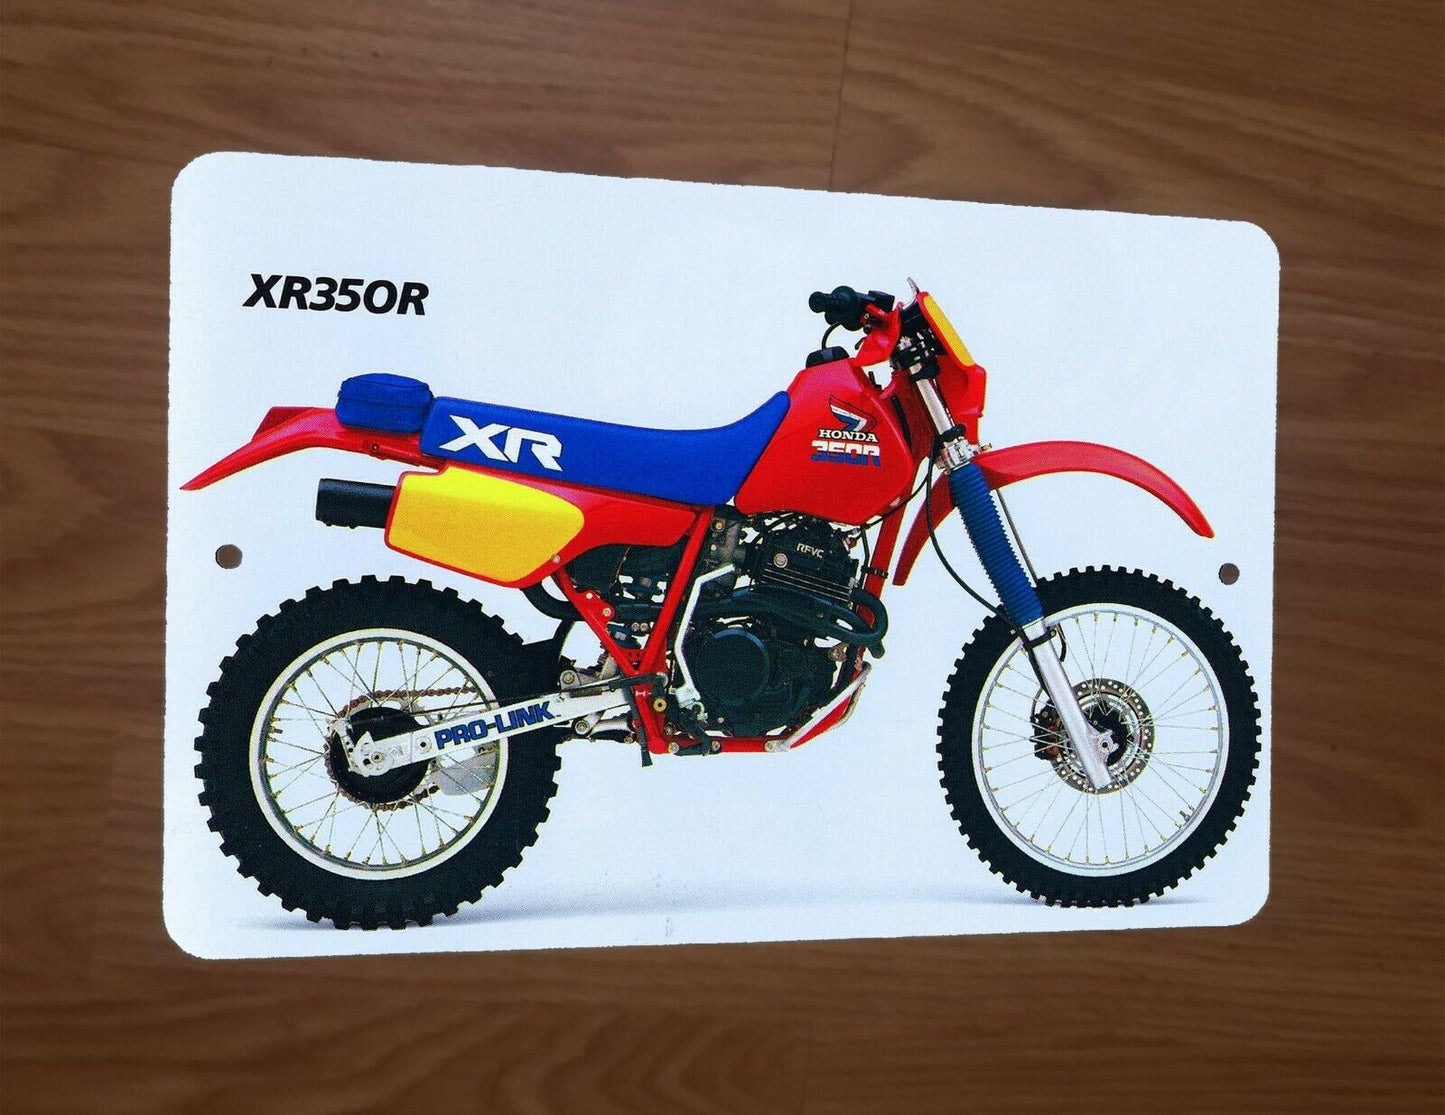 1985 Honda XR350R  Motocross Motorcycle Dirt Bike Photo 8x12 Metal Wall Sign Garage Poster